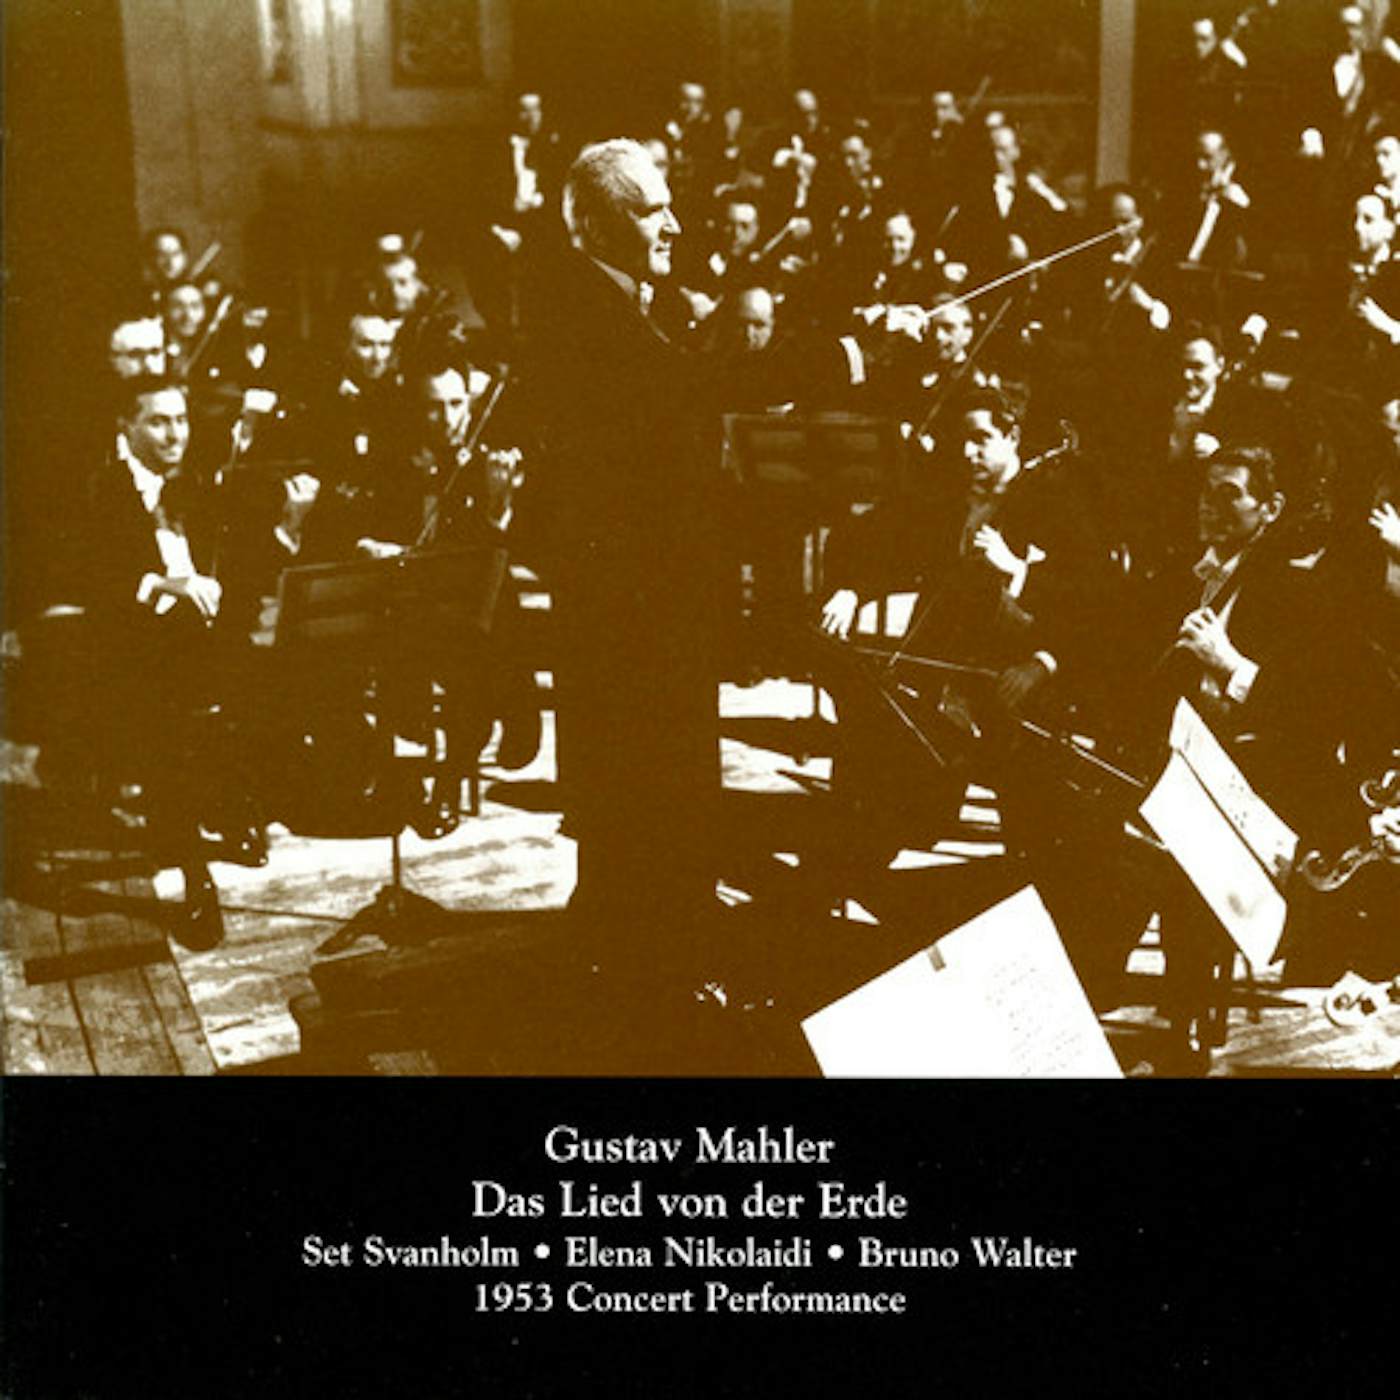 BRUNO WALTER CONDUCTS Gustav Mahler CD